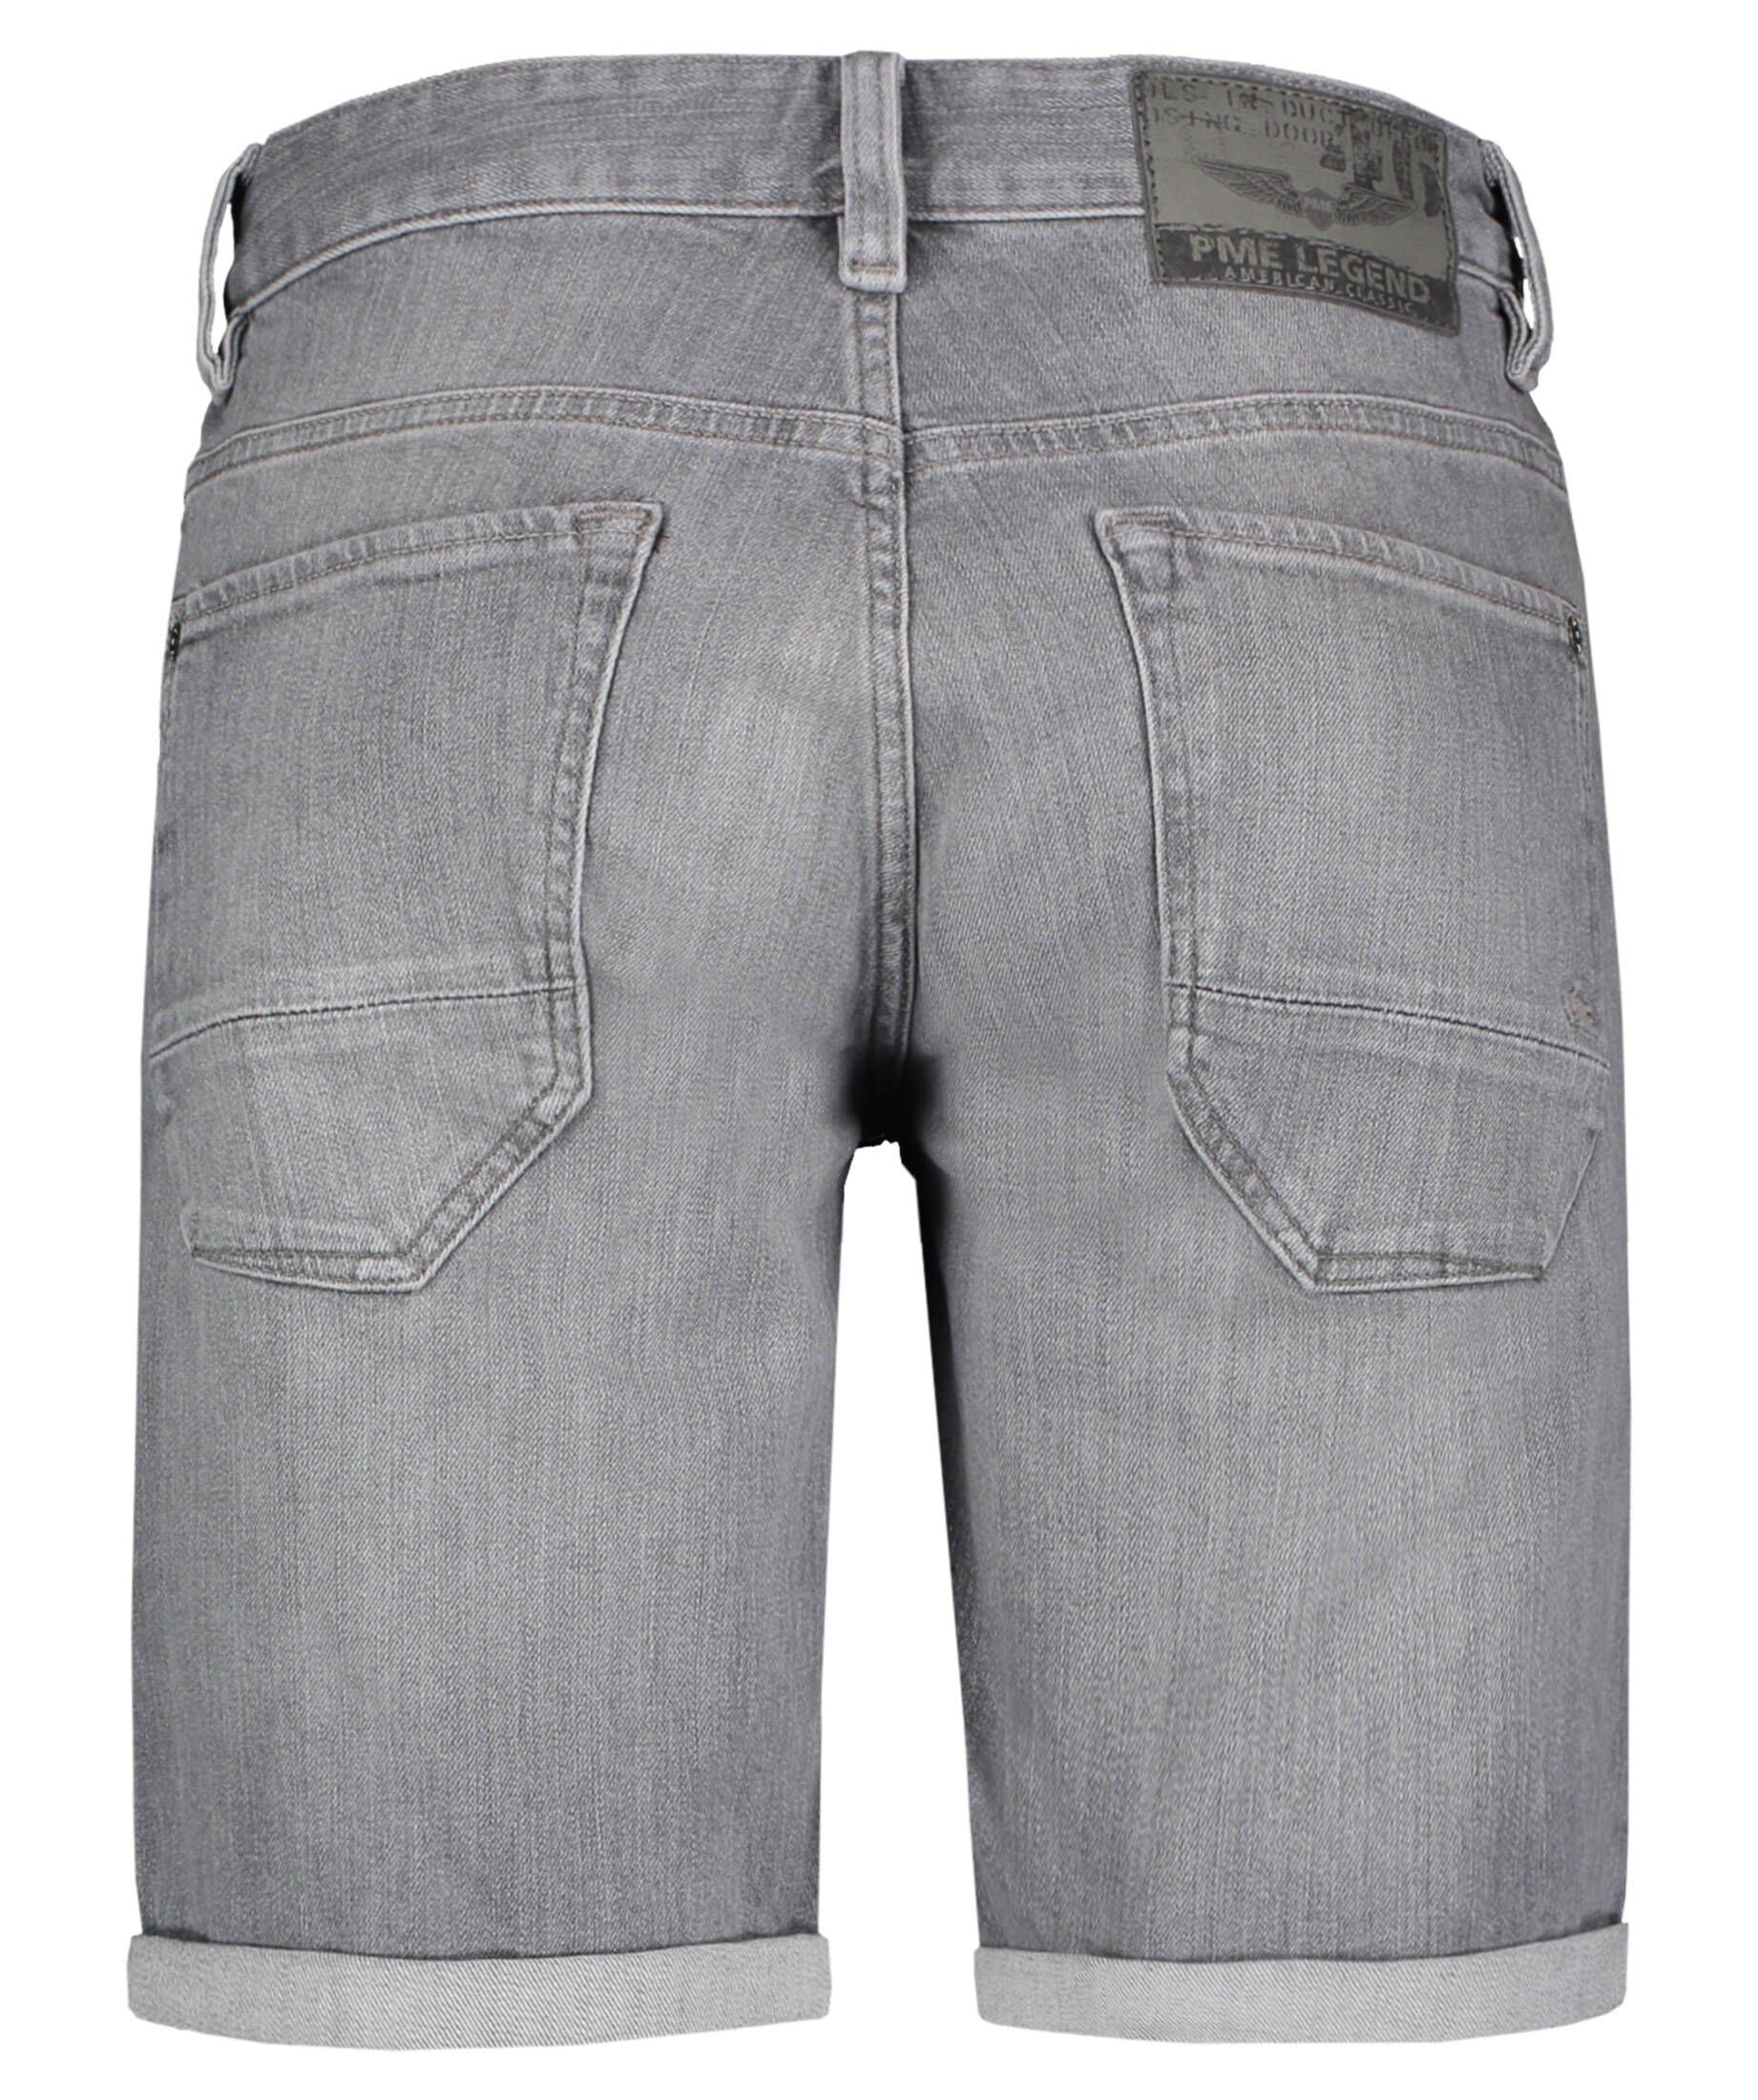 PME LEGEND Regular Jeansshorts silber Jeanshorts NIGHTFLIGHT Herren (12) Fit